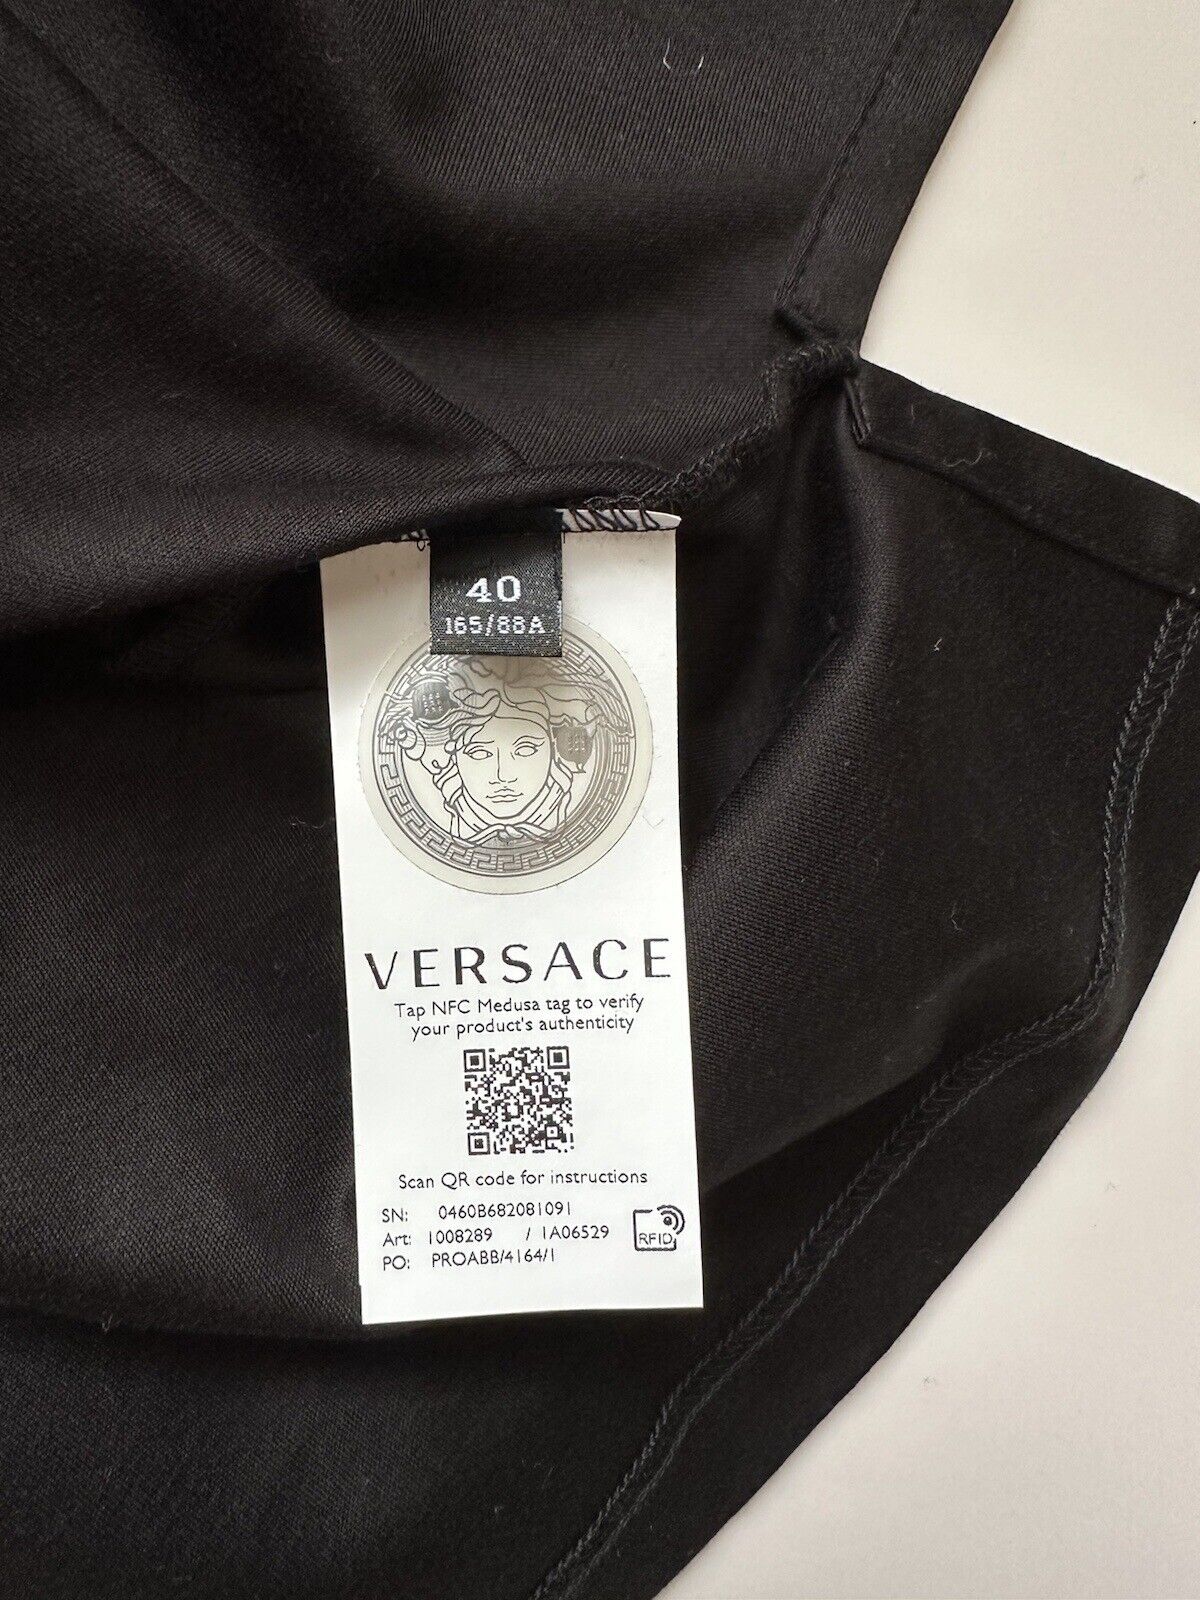 NWT $775 Versace Goddess Logo T-Shirt  6 US (40 Euro) Black 1A06529 Italy